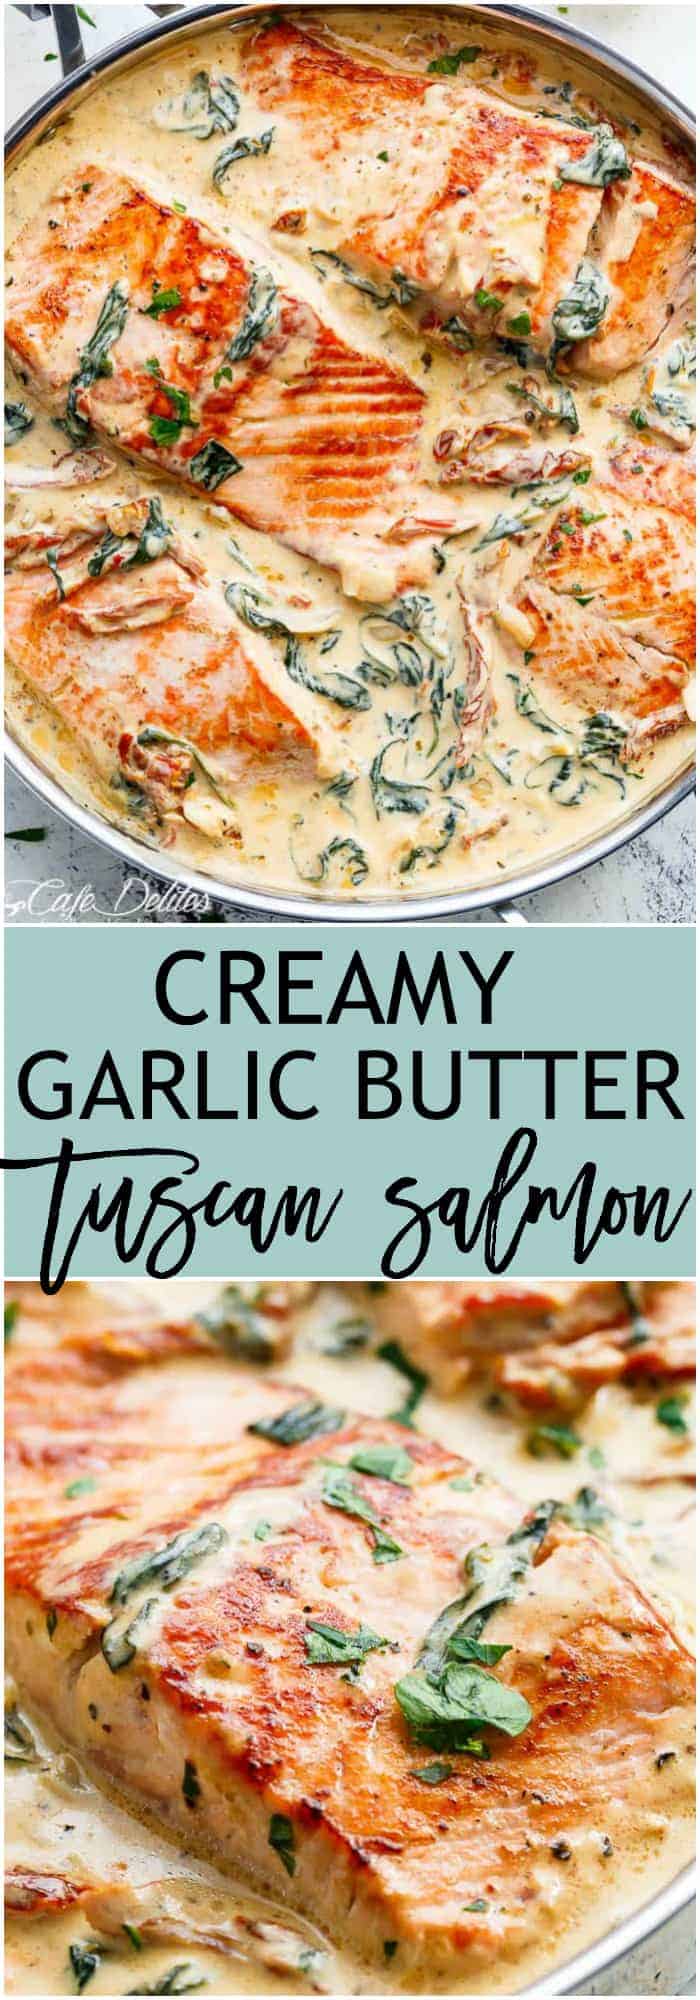 Creamy Garlic Butter Tuscan Salmon (OR FISH) - Cafe Delites